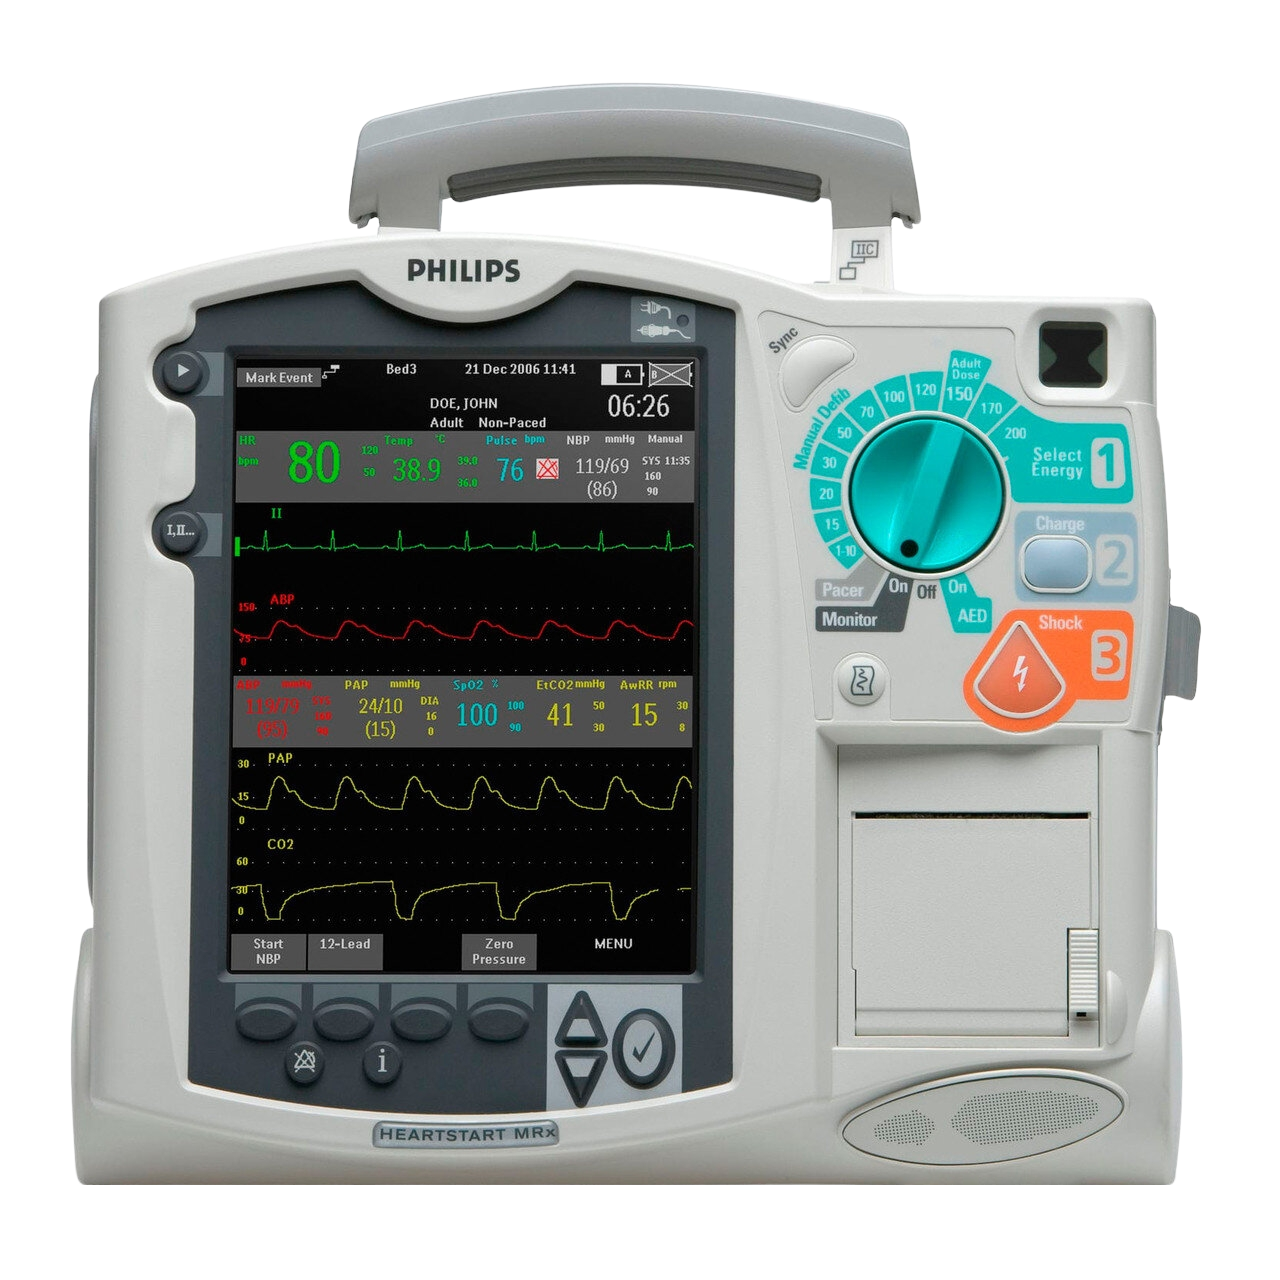 Repair of Philips Heartstart MRx Defibrillator